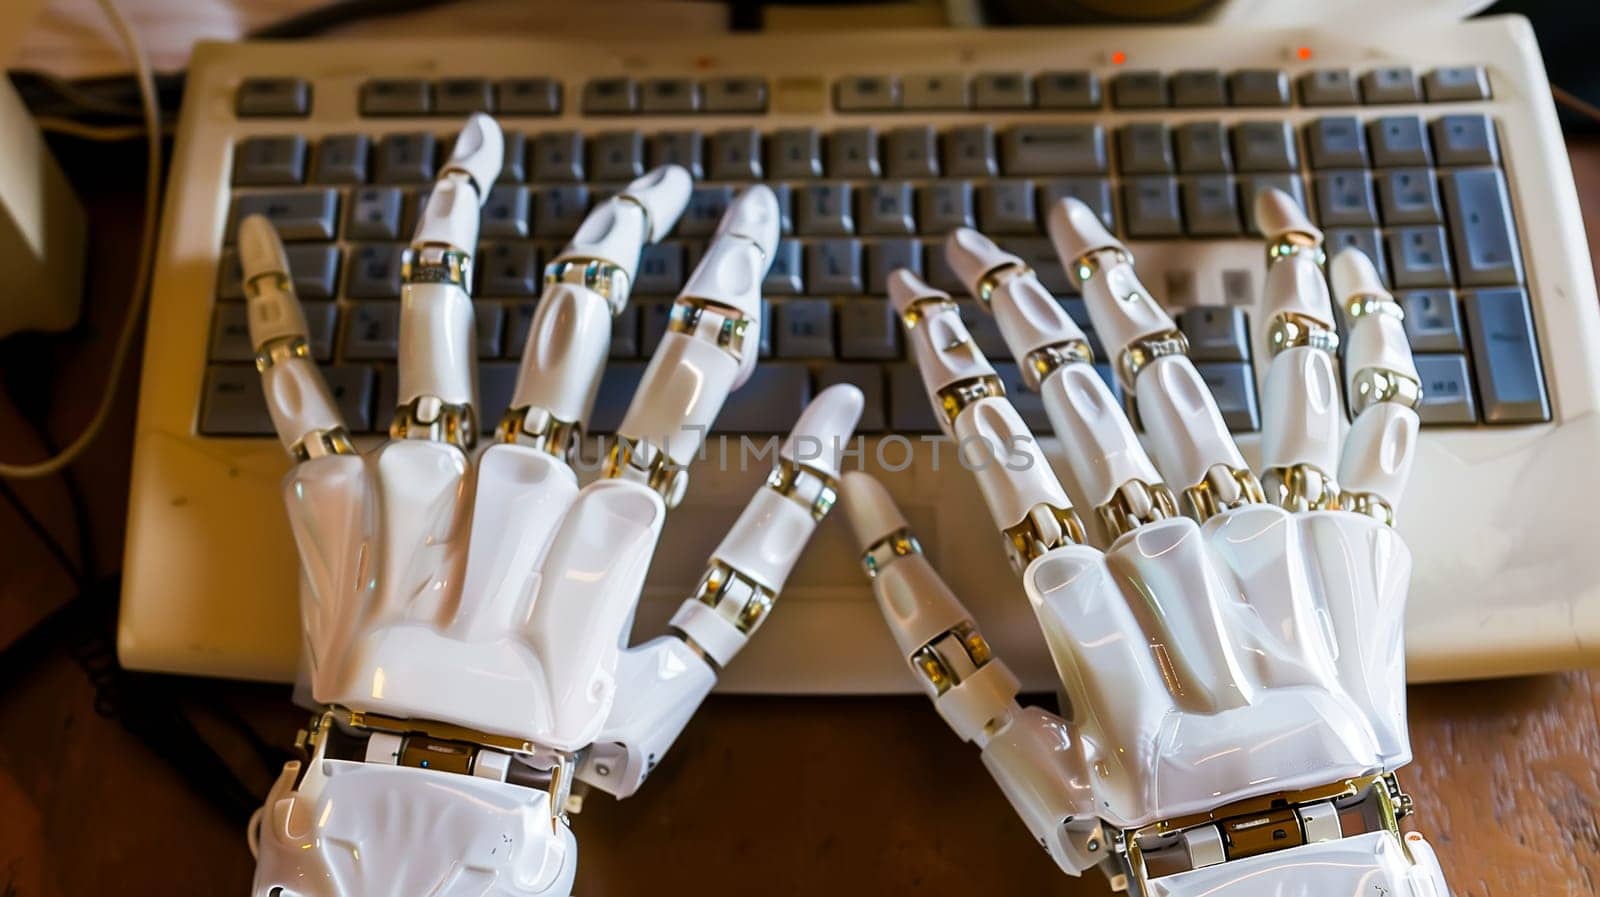 Robot hands using laptop computer typing by sarymsakov